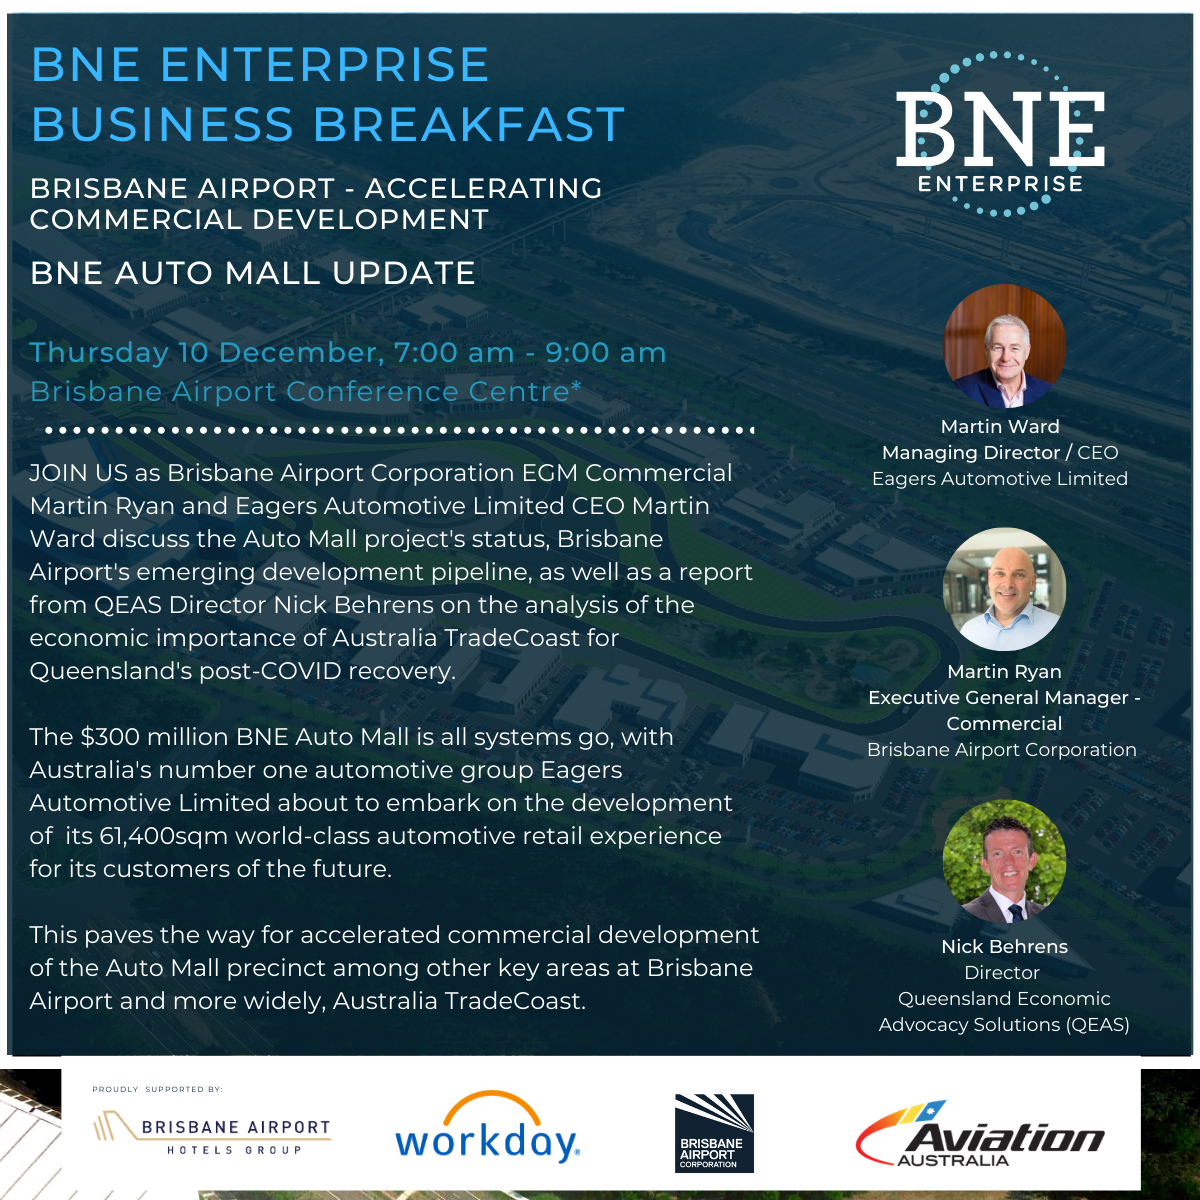 BNE Enterprise Business Breakfast 10 December – Brisbane Airport Accelerating Commercial Development; BNE Auto Mall update